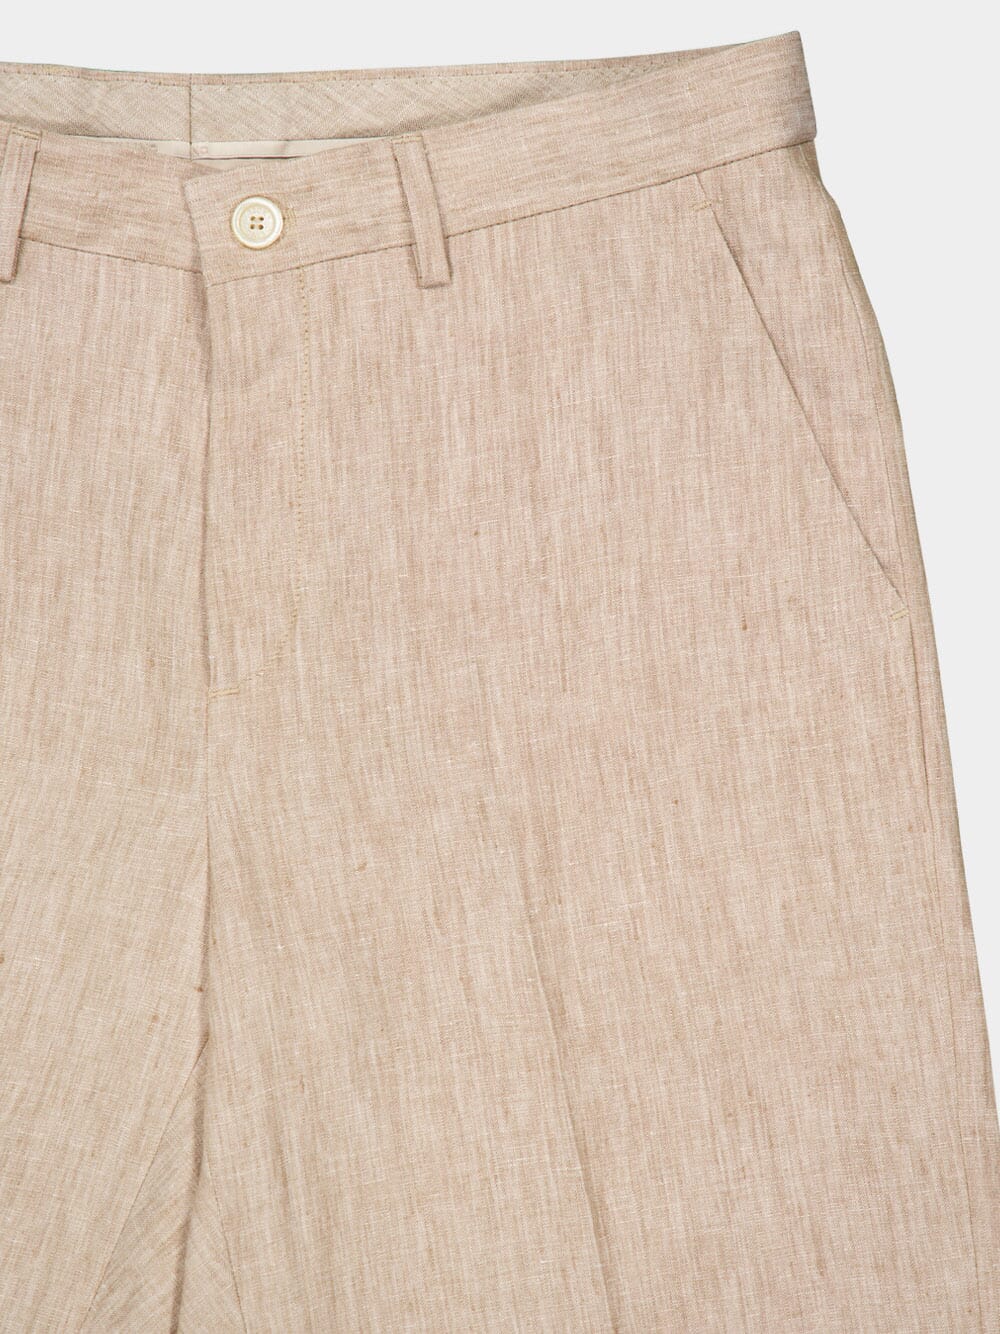 Bermuda Beige Linen Shorts